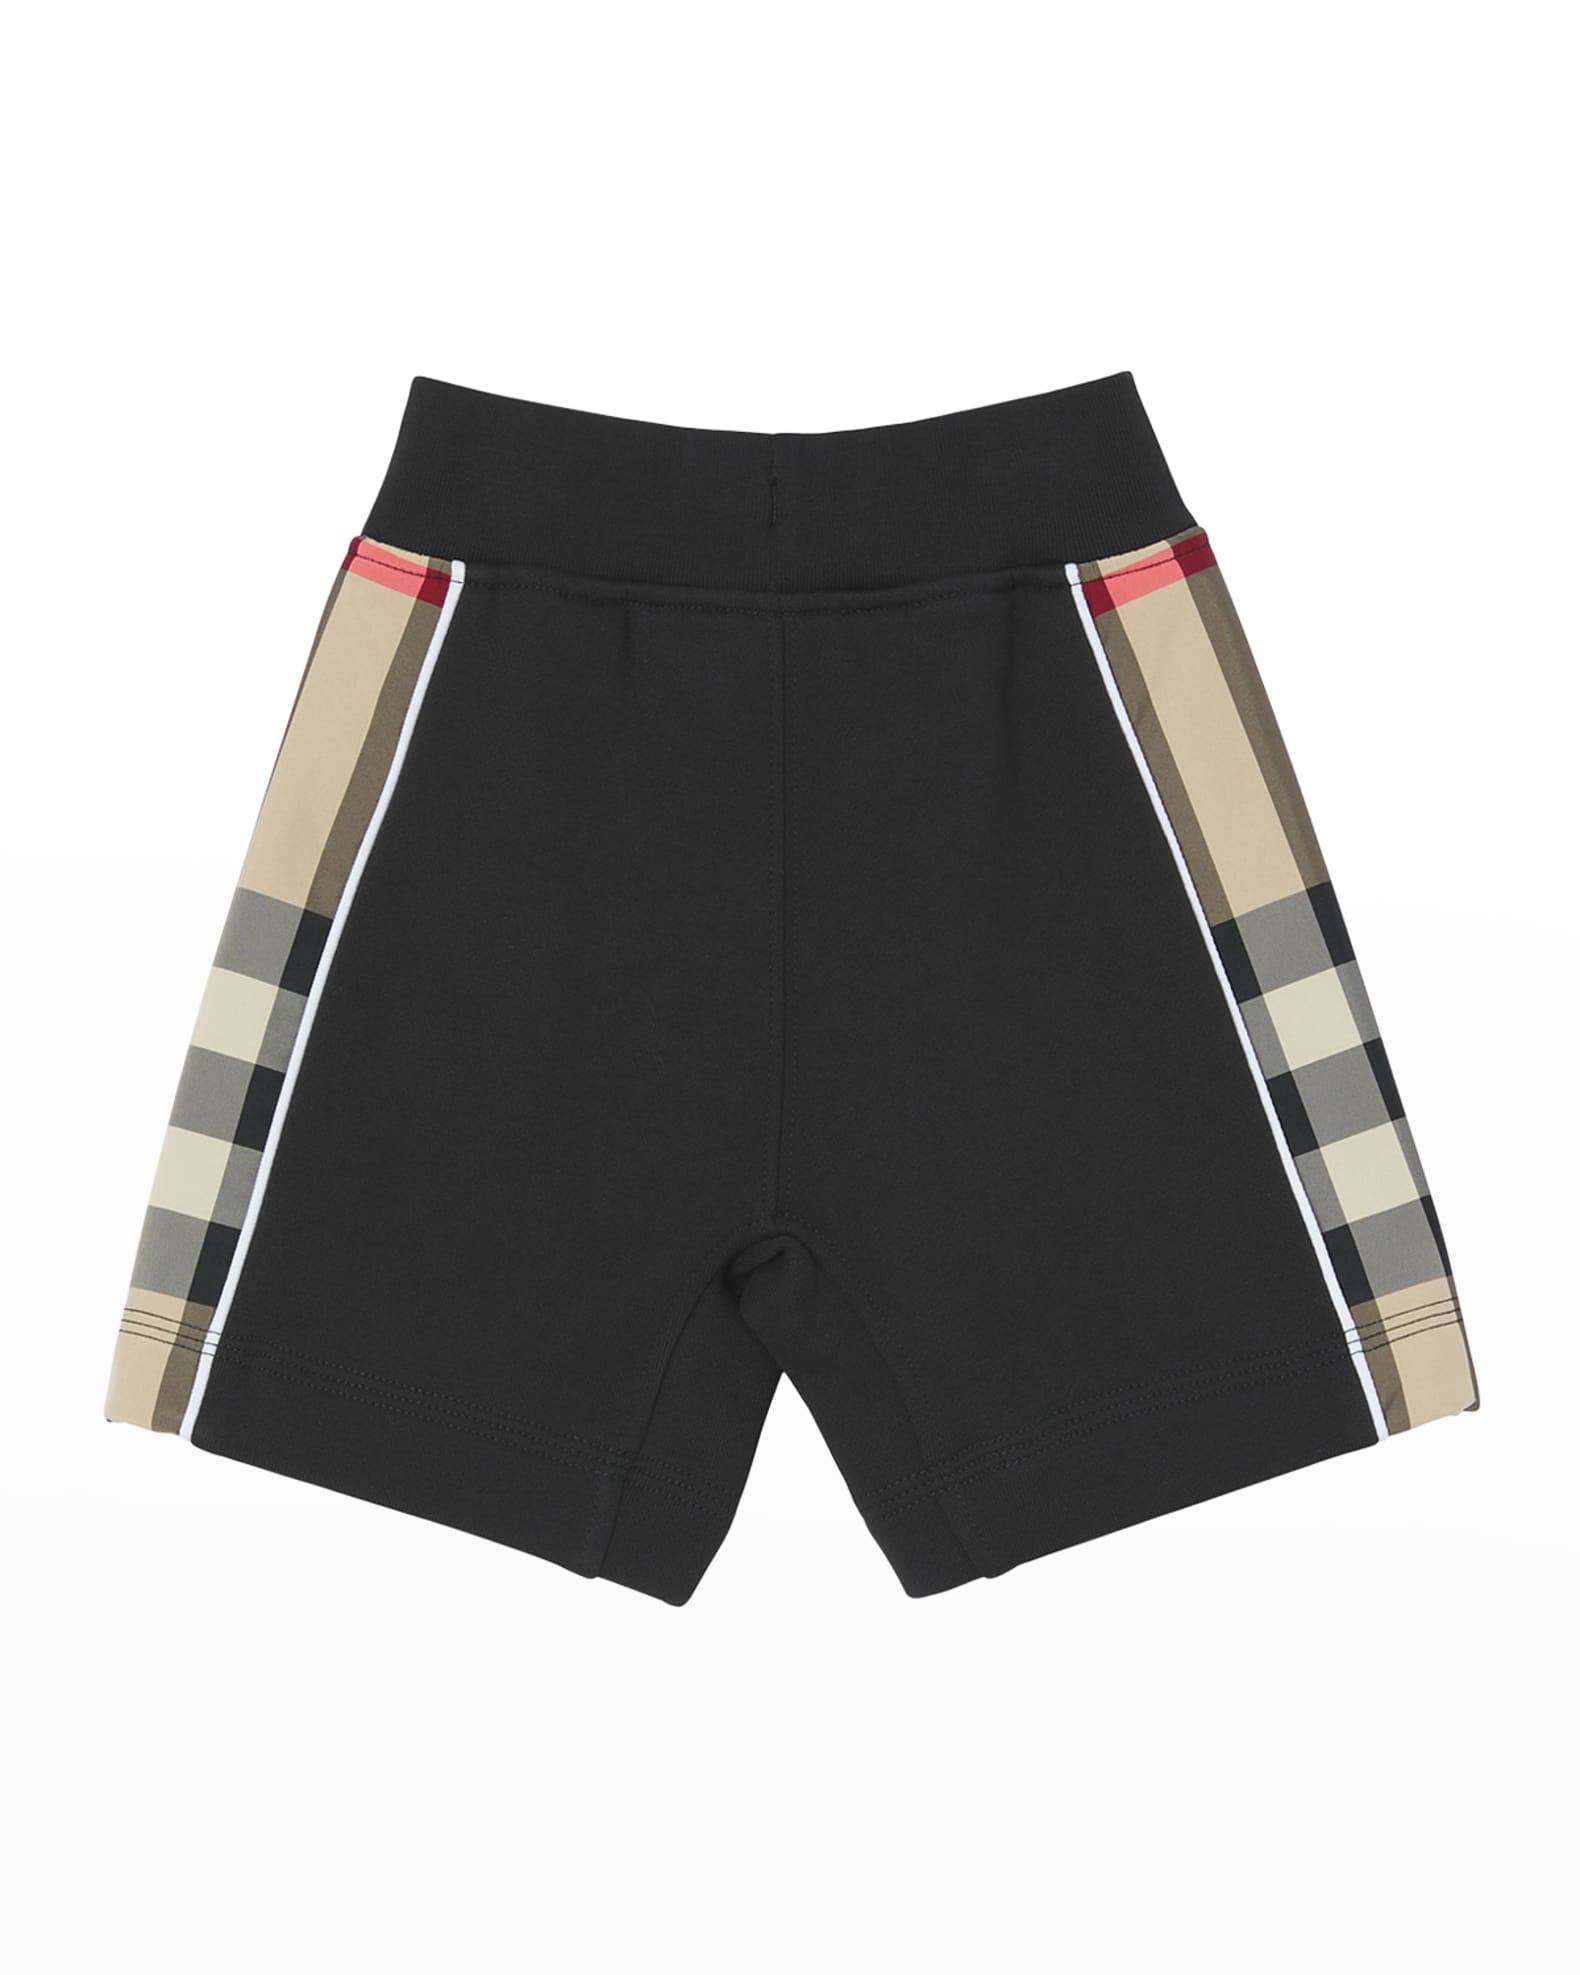 Burberry Boy's Graham Vintage Check Shorts, Size 6M-2 | Neiman Marcus